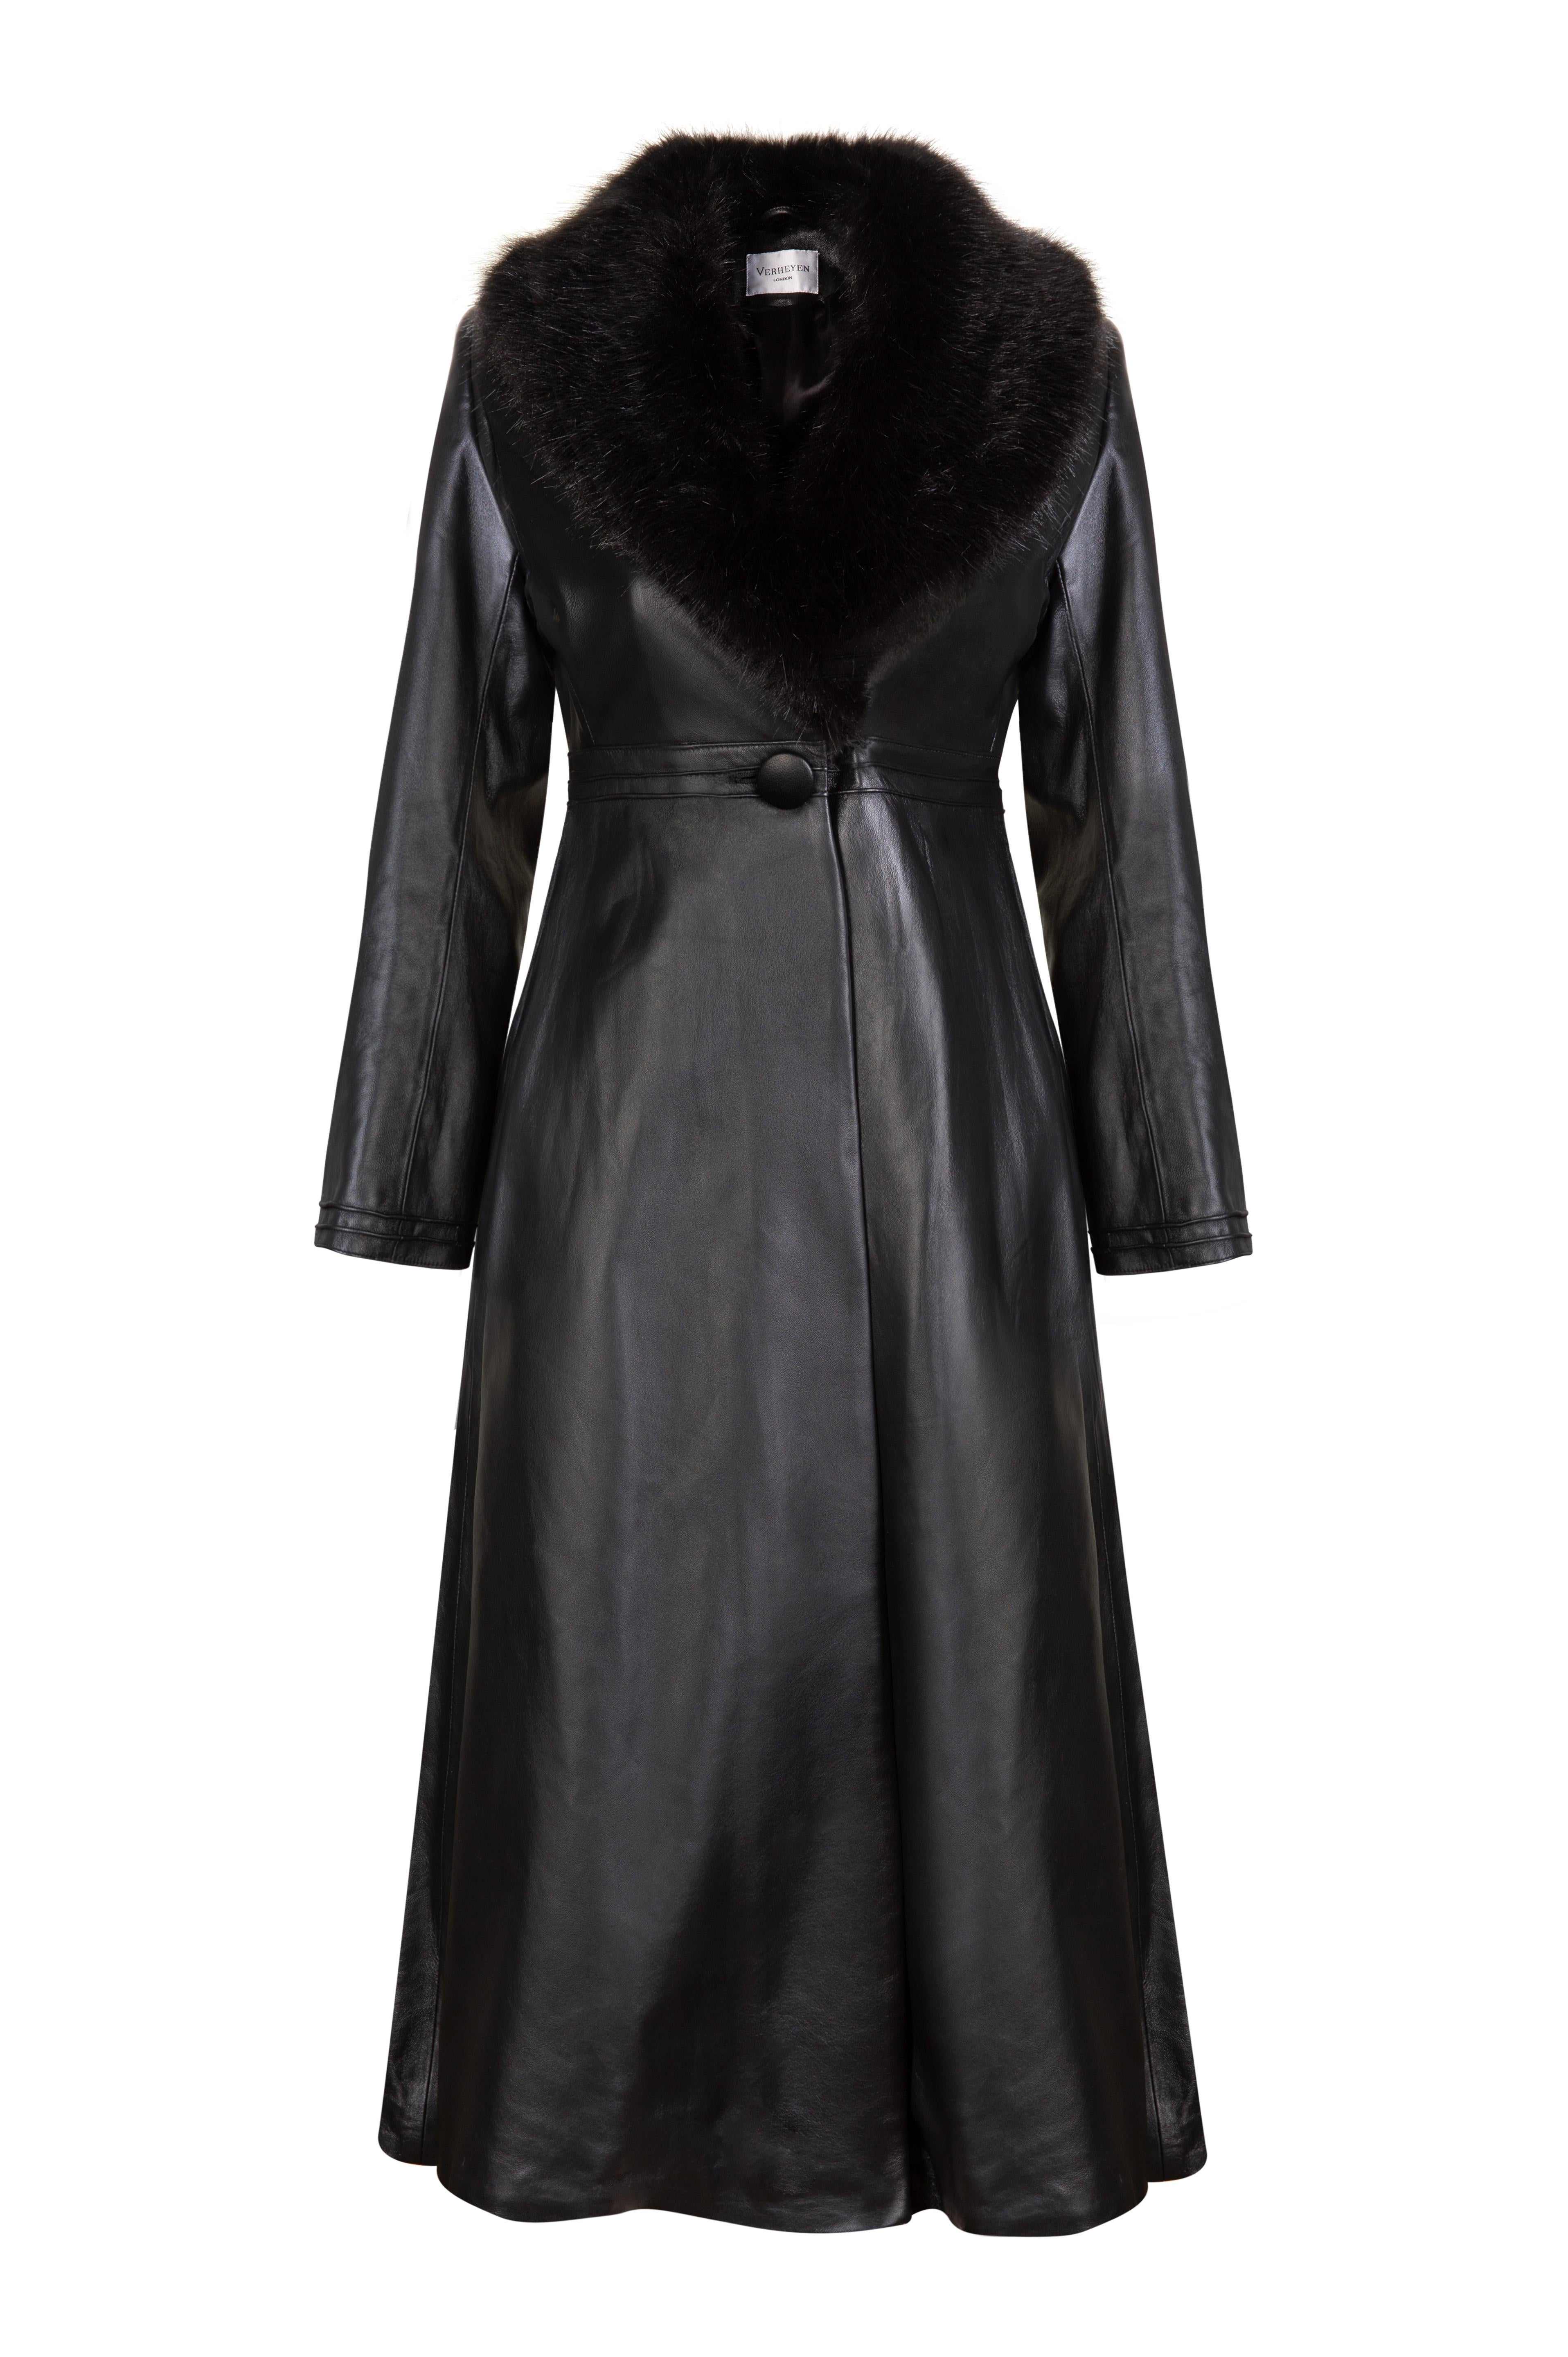 Verheyen London Edward Leather Coat with Faux Fur Collar in Black - Size uk 12 For Sale 14